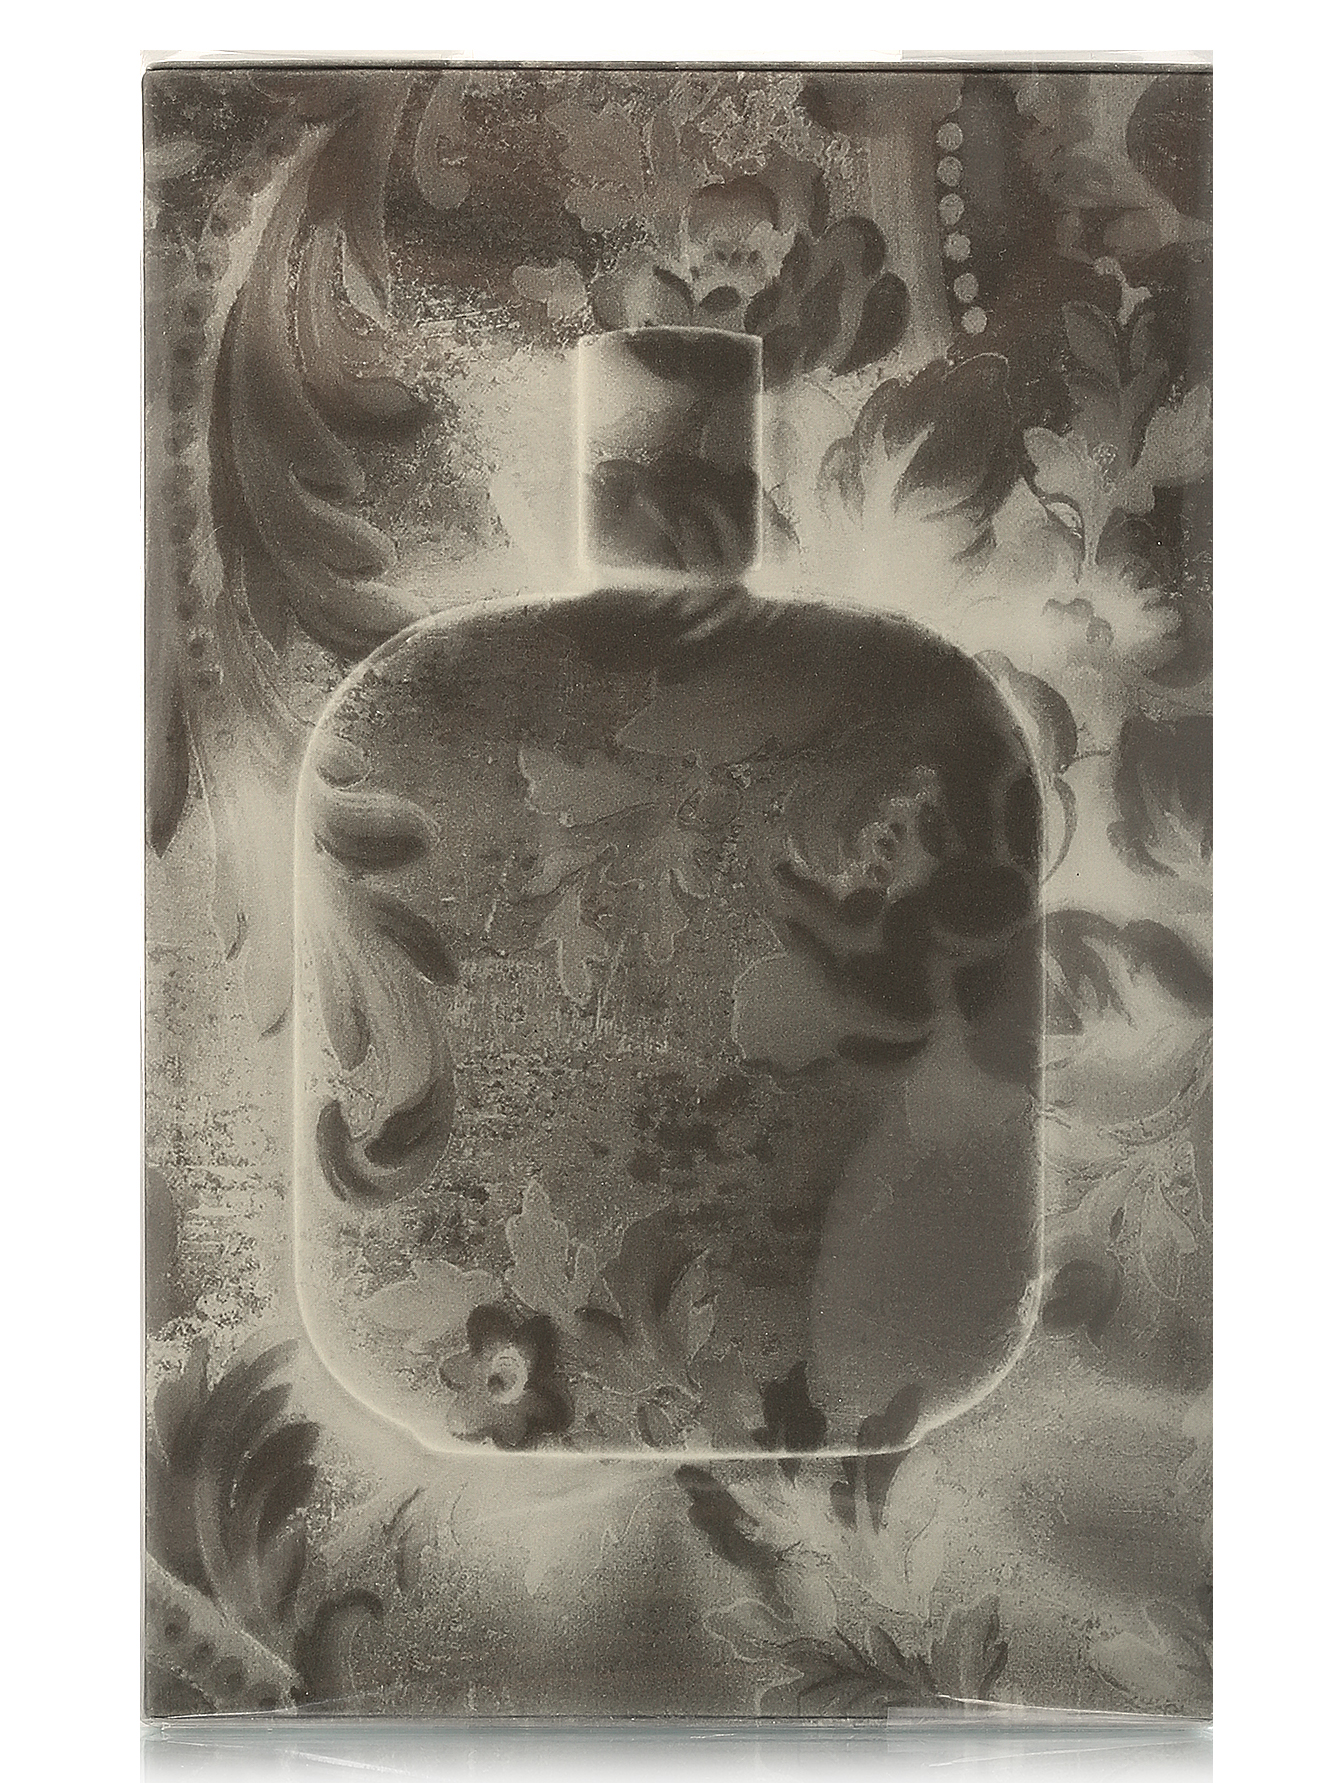  Парфюмерная вода - Опус VIII Library Collection, 50ml - Модель Верх-Низ